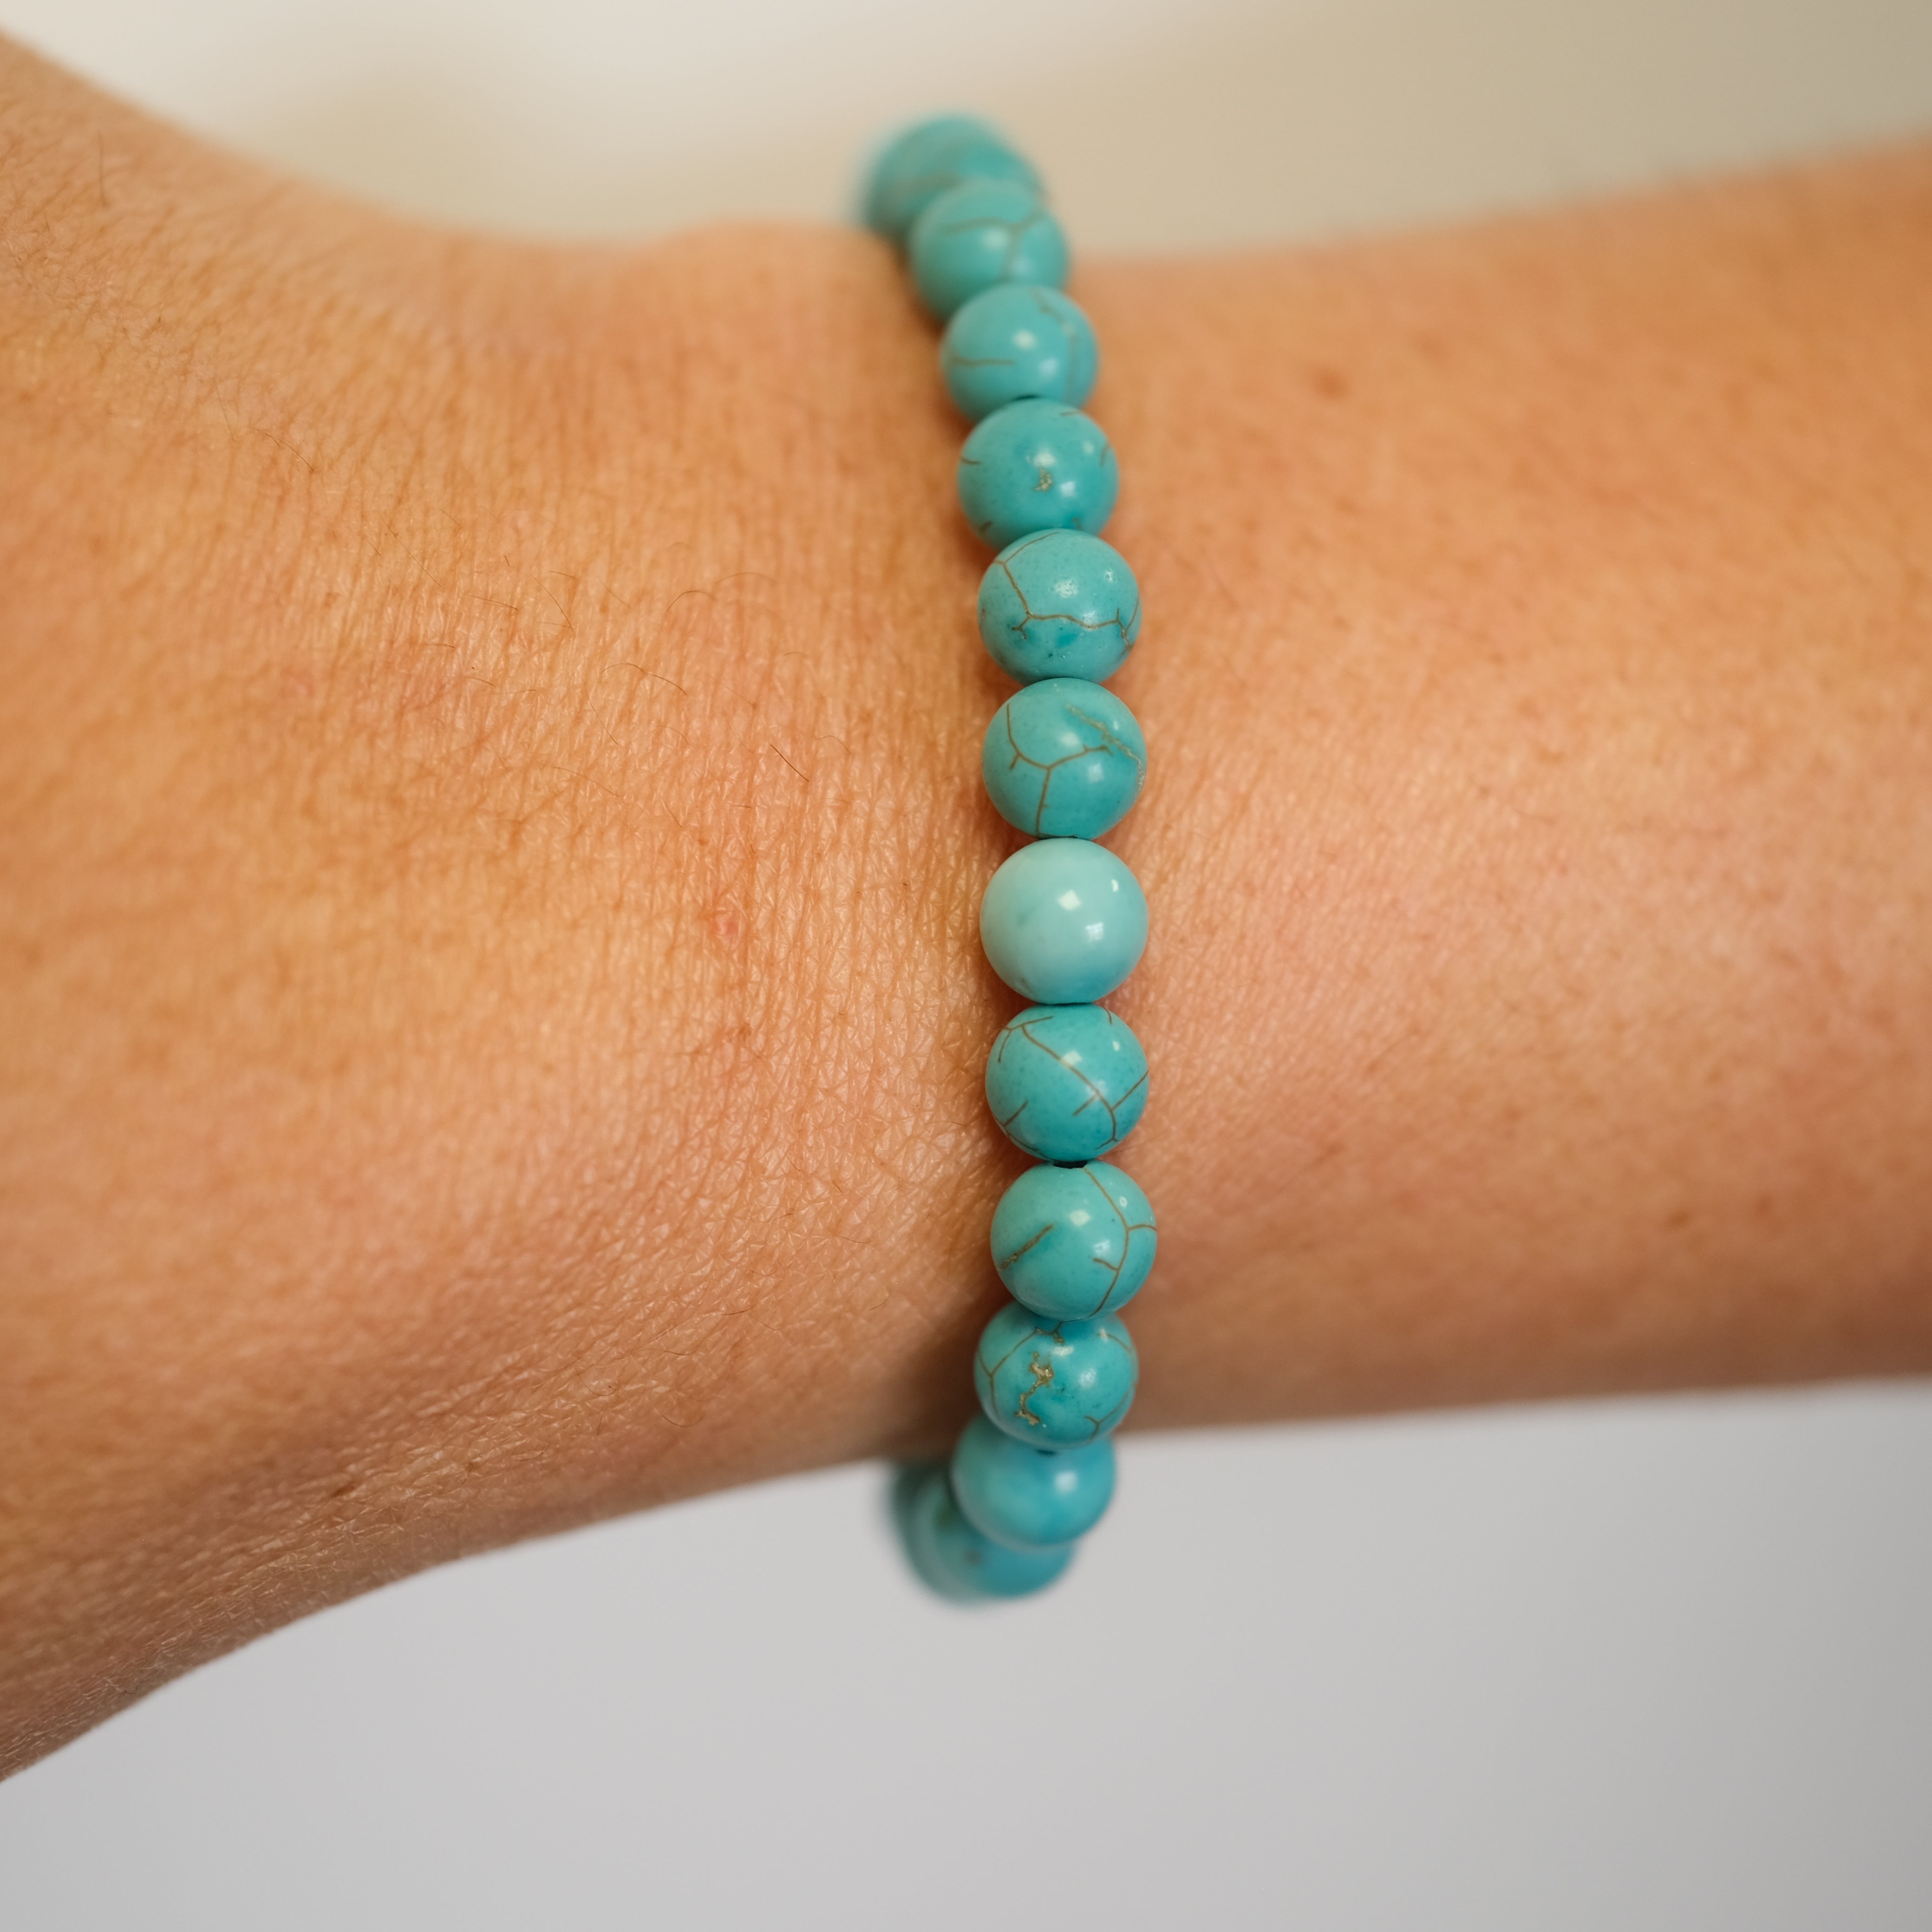 A turquoise gemstone bracelet in 6mm beads worn on a model's wrist